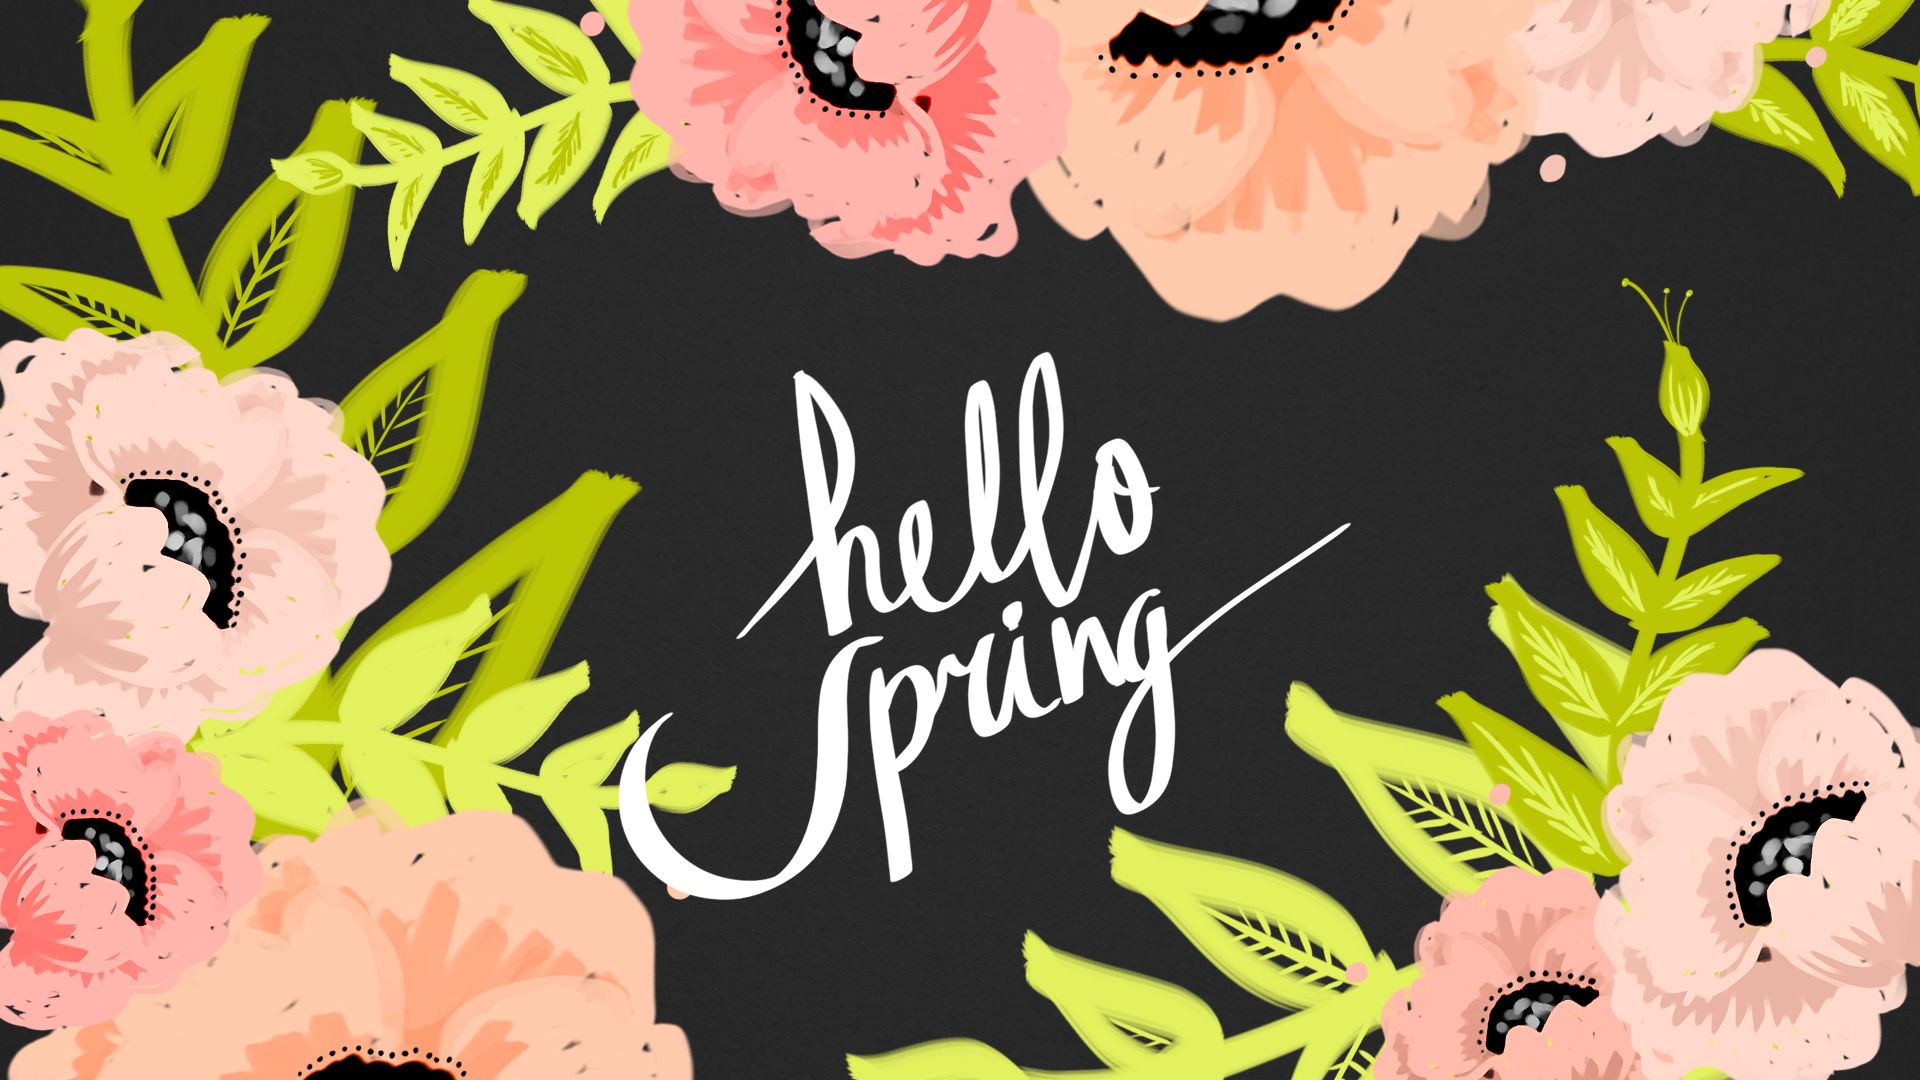 Hello Spring Wallpaper Free Hello Spring Background